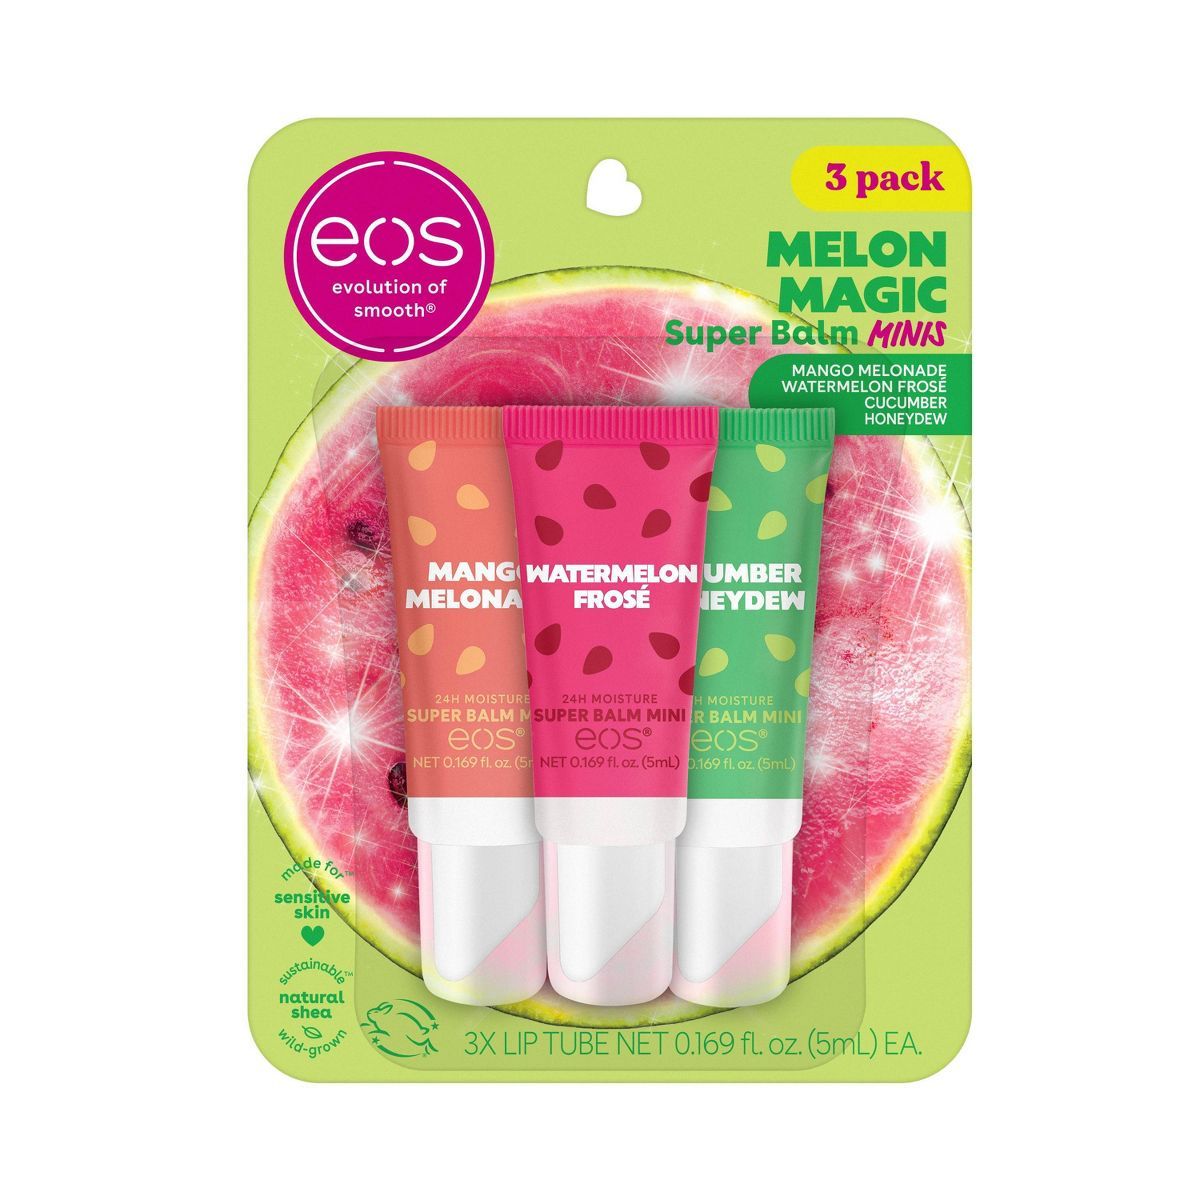 eos 24hrs Moisture Super Balm Minis - Melon Magic - 0.169 fl oz/3pk | Target